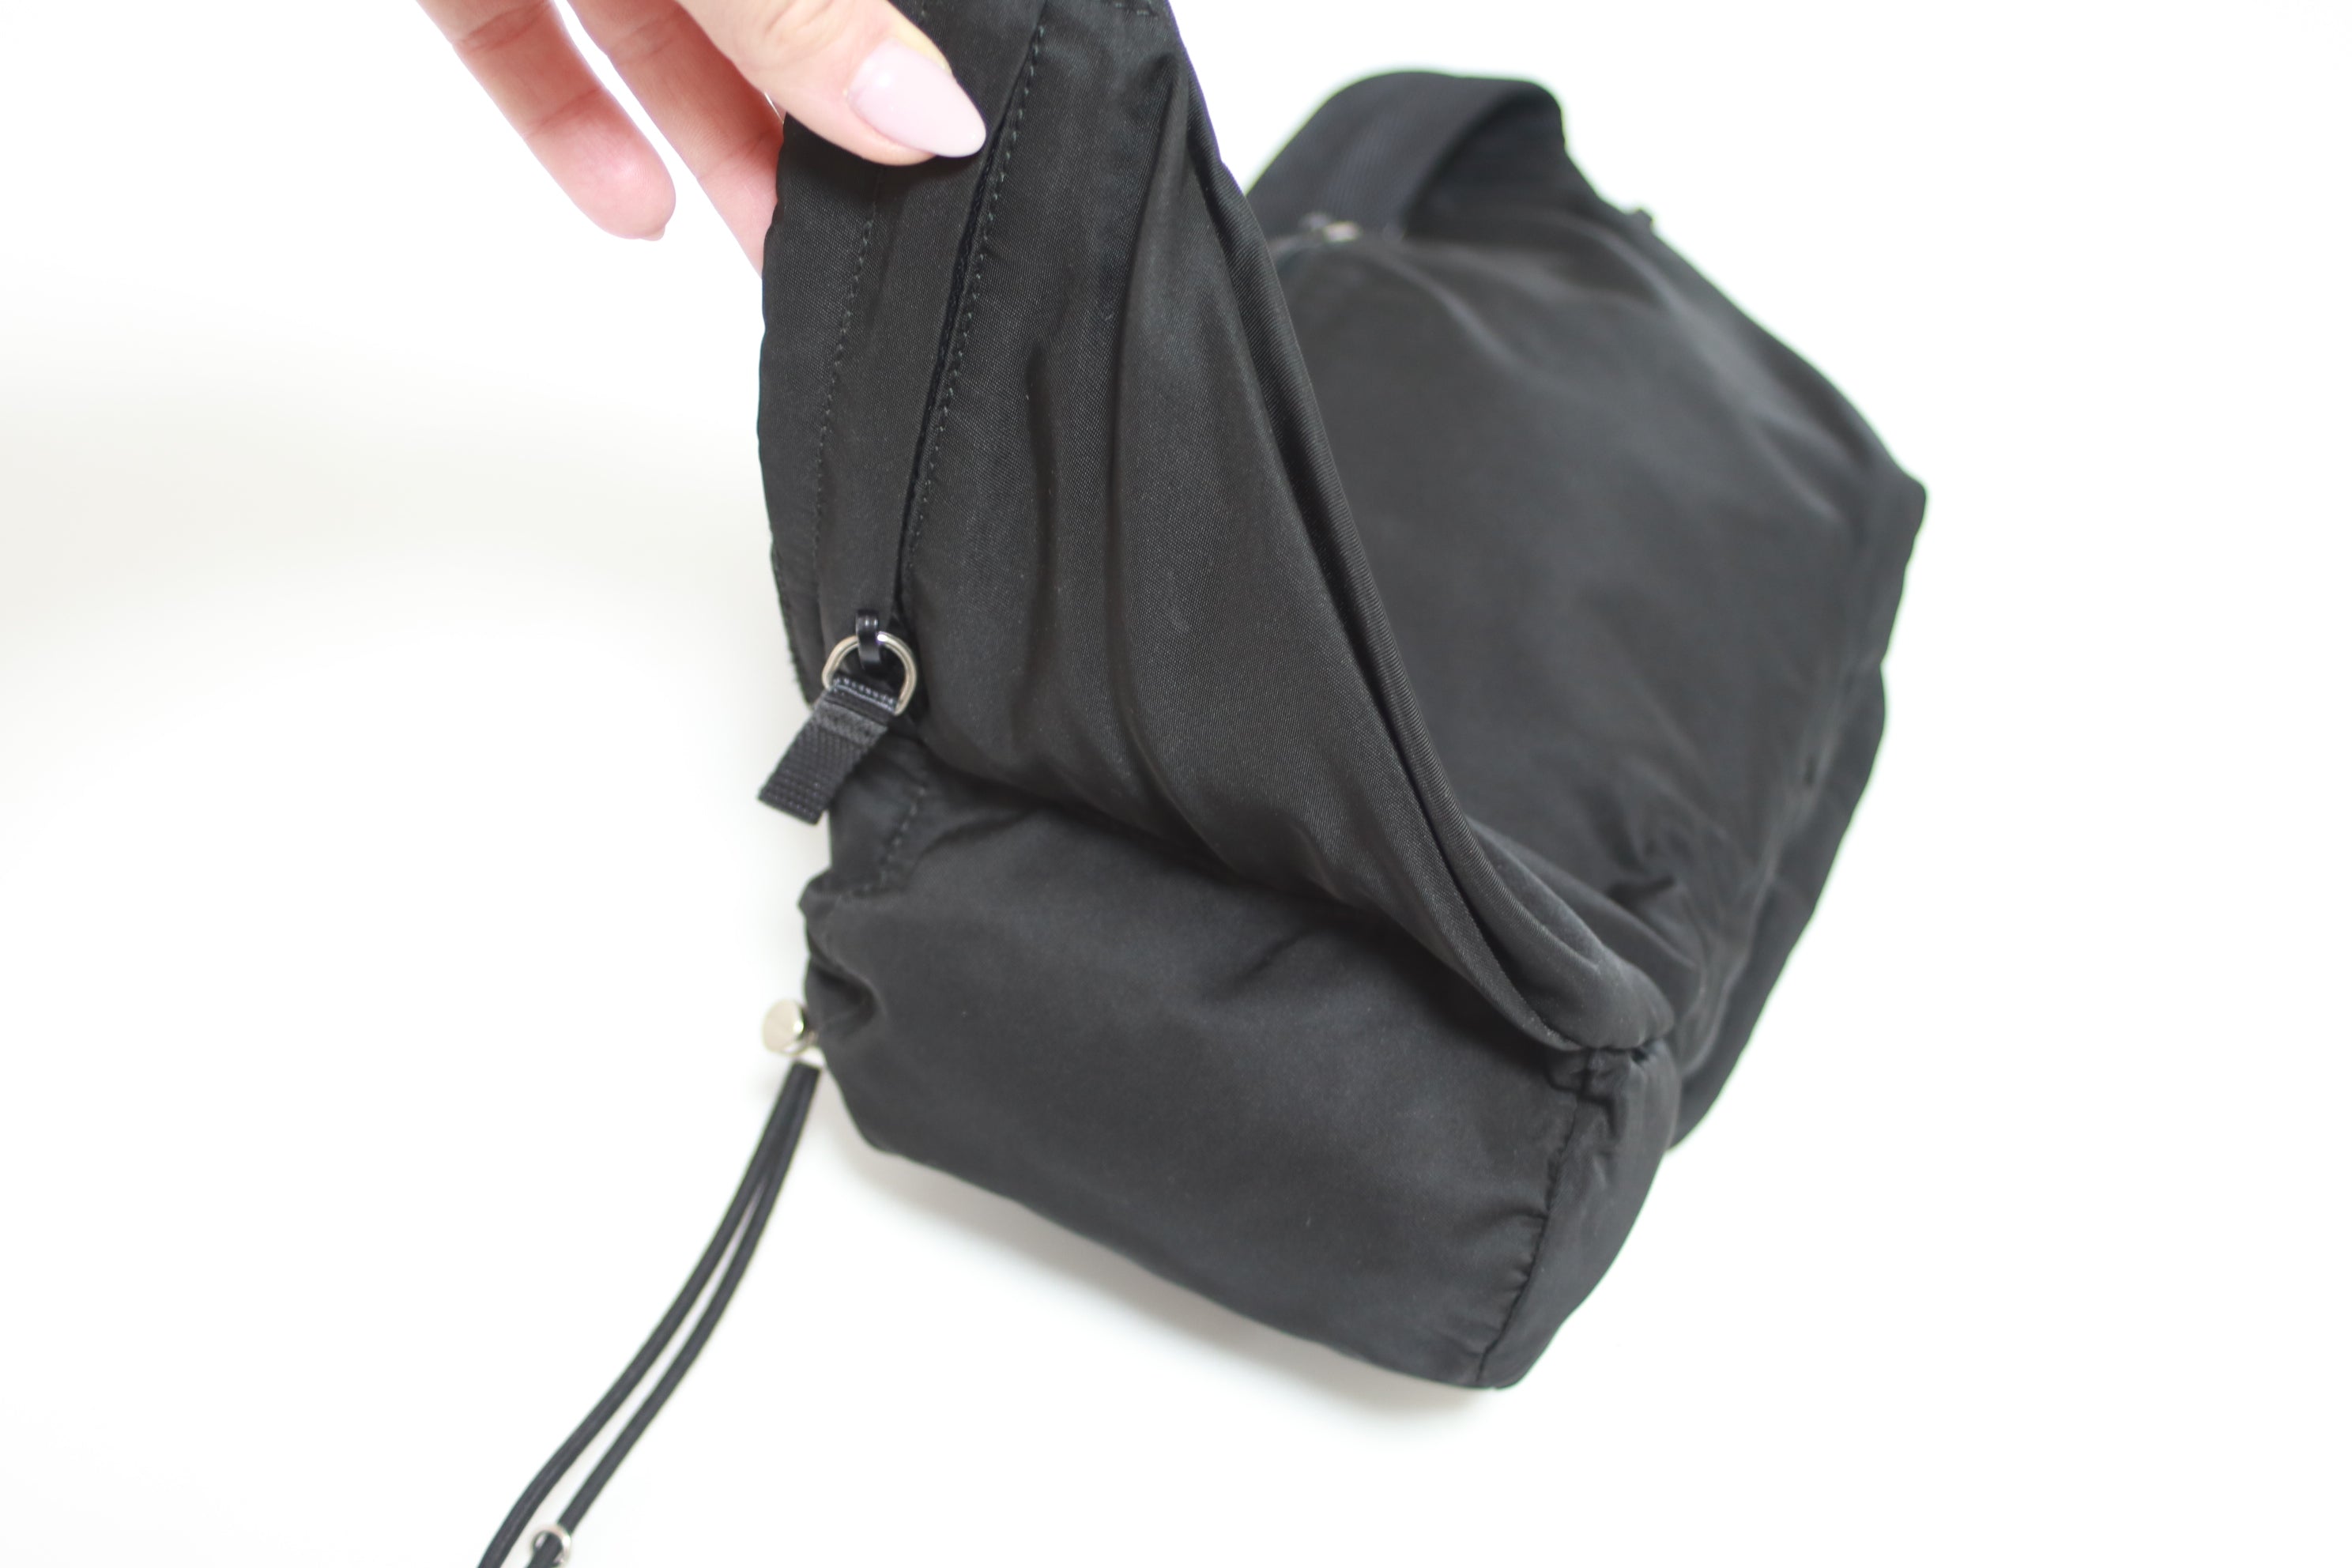 Prada Nylon Waist Bag Black Used (8118)